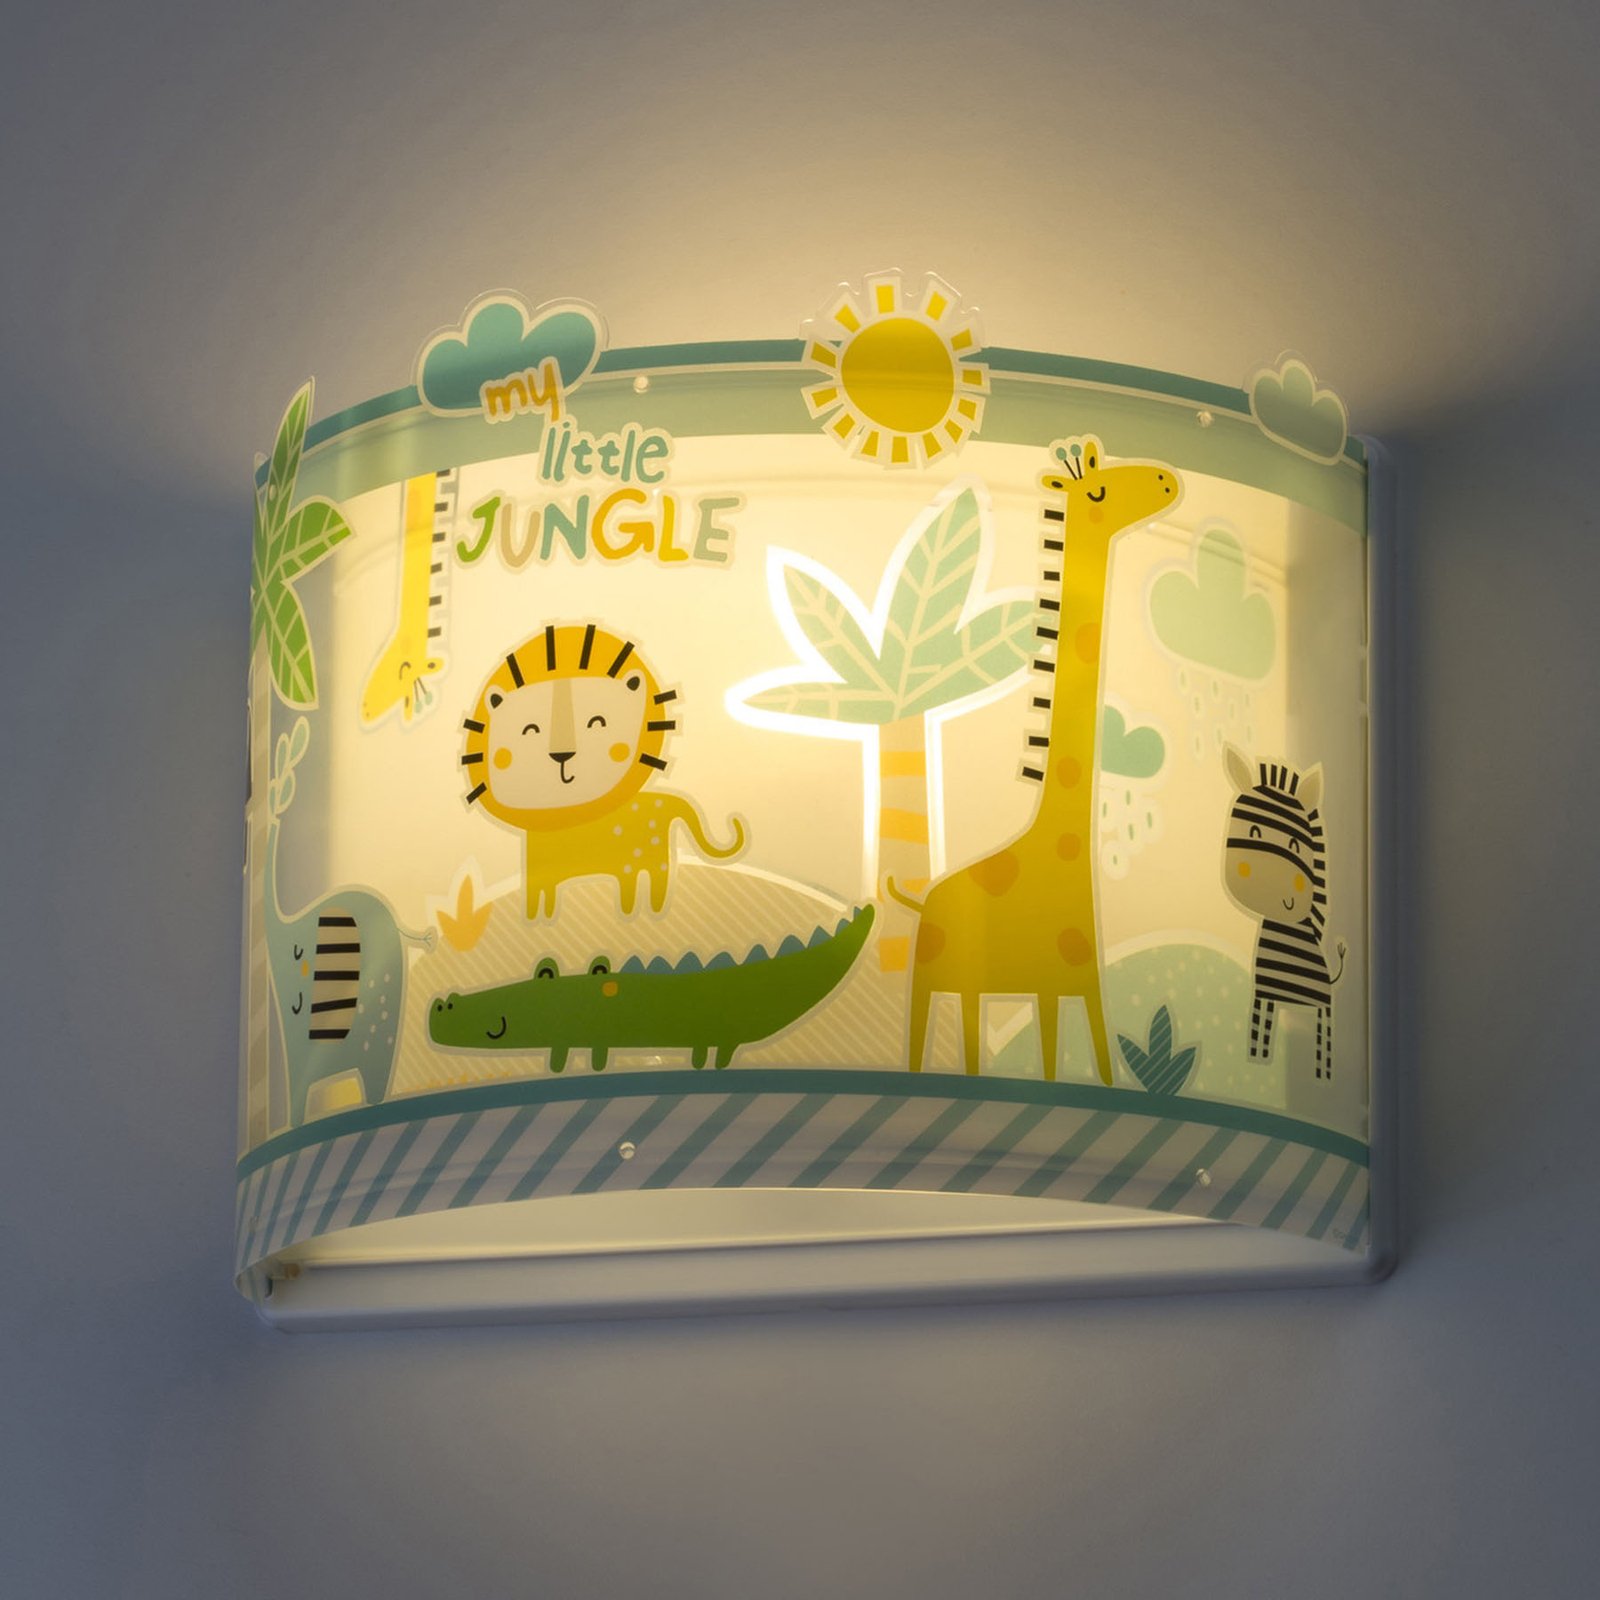 Little Jungle children's wall light with plug